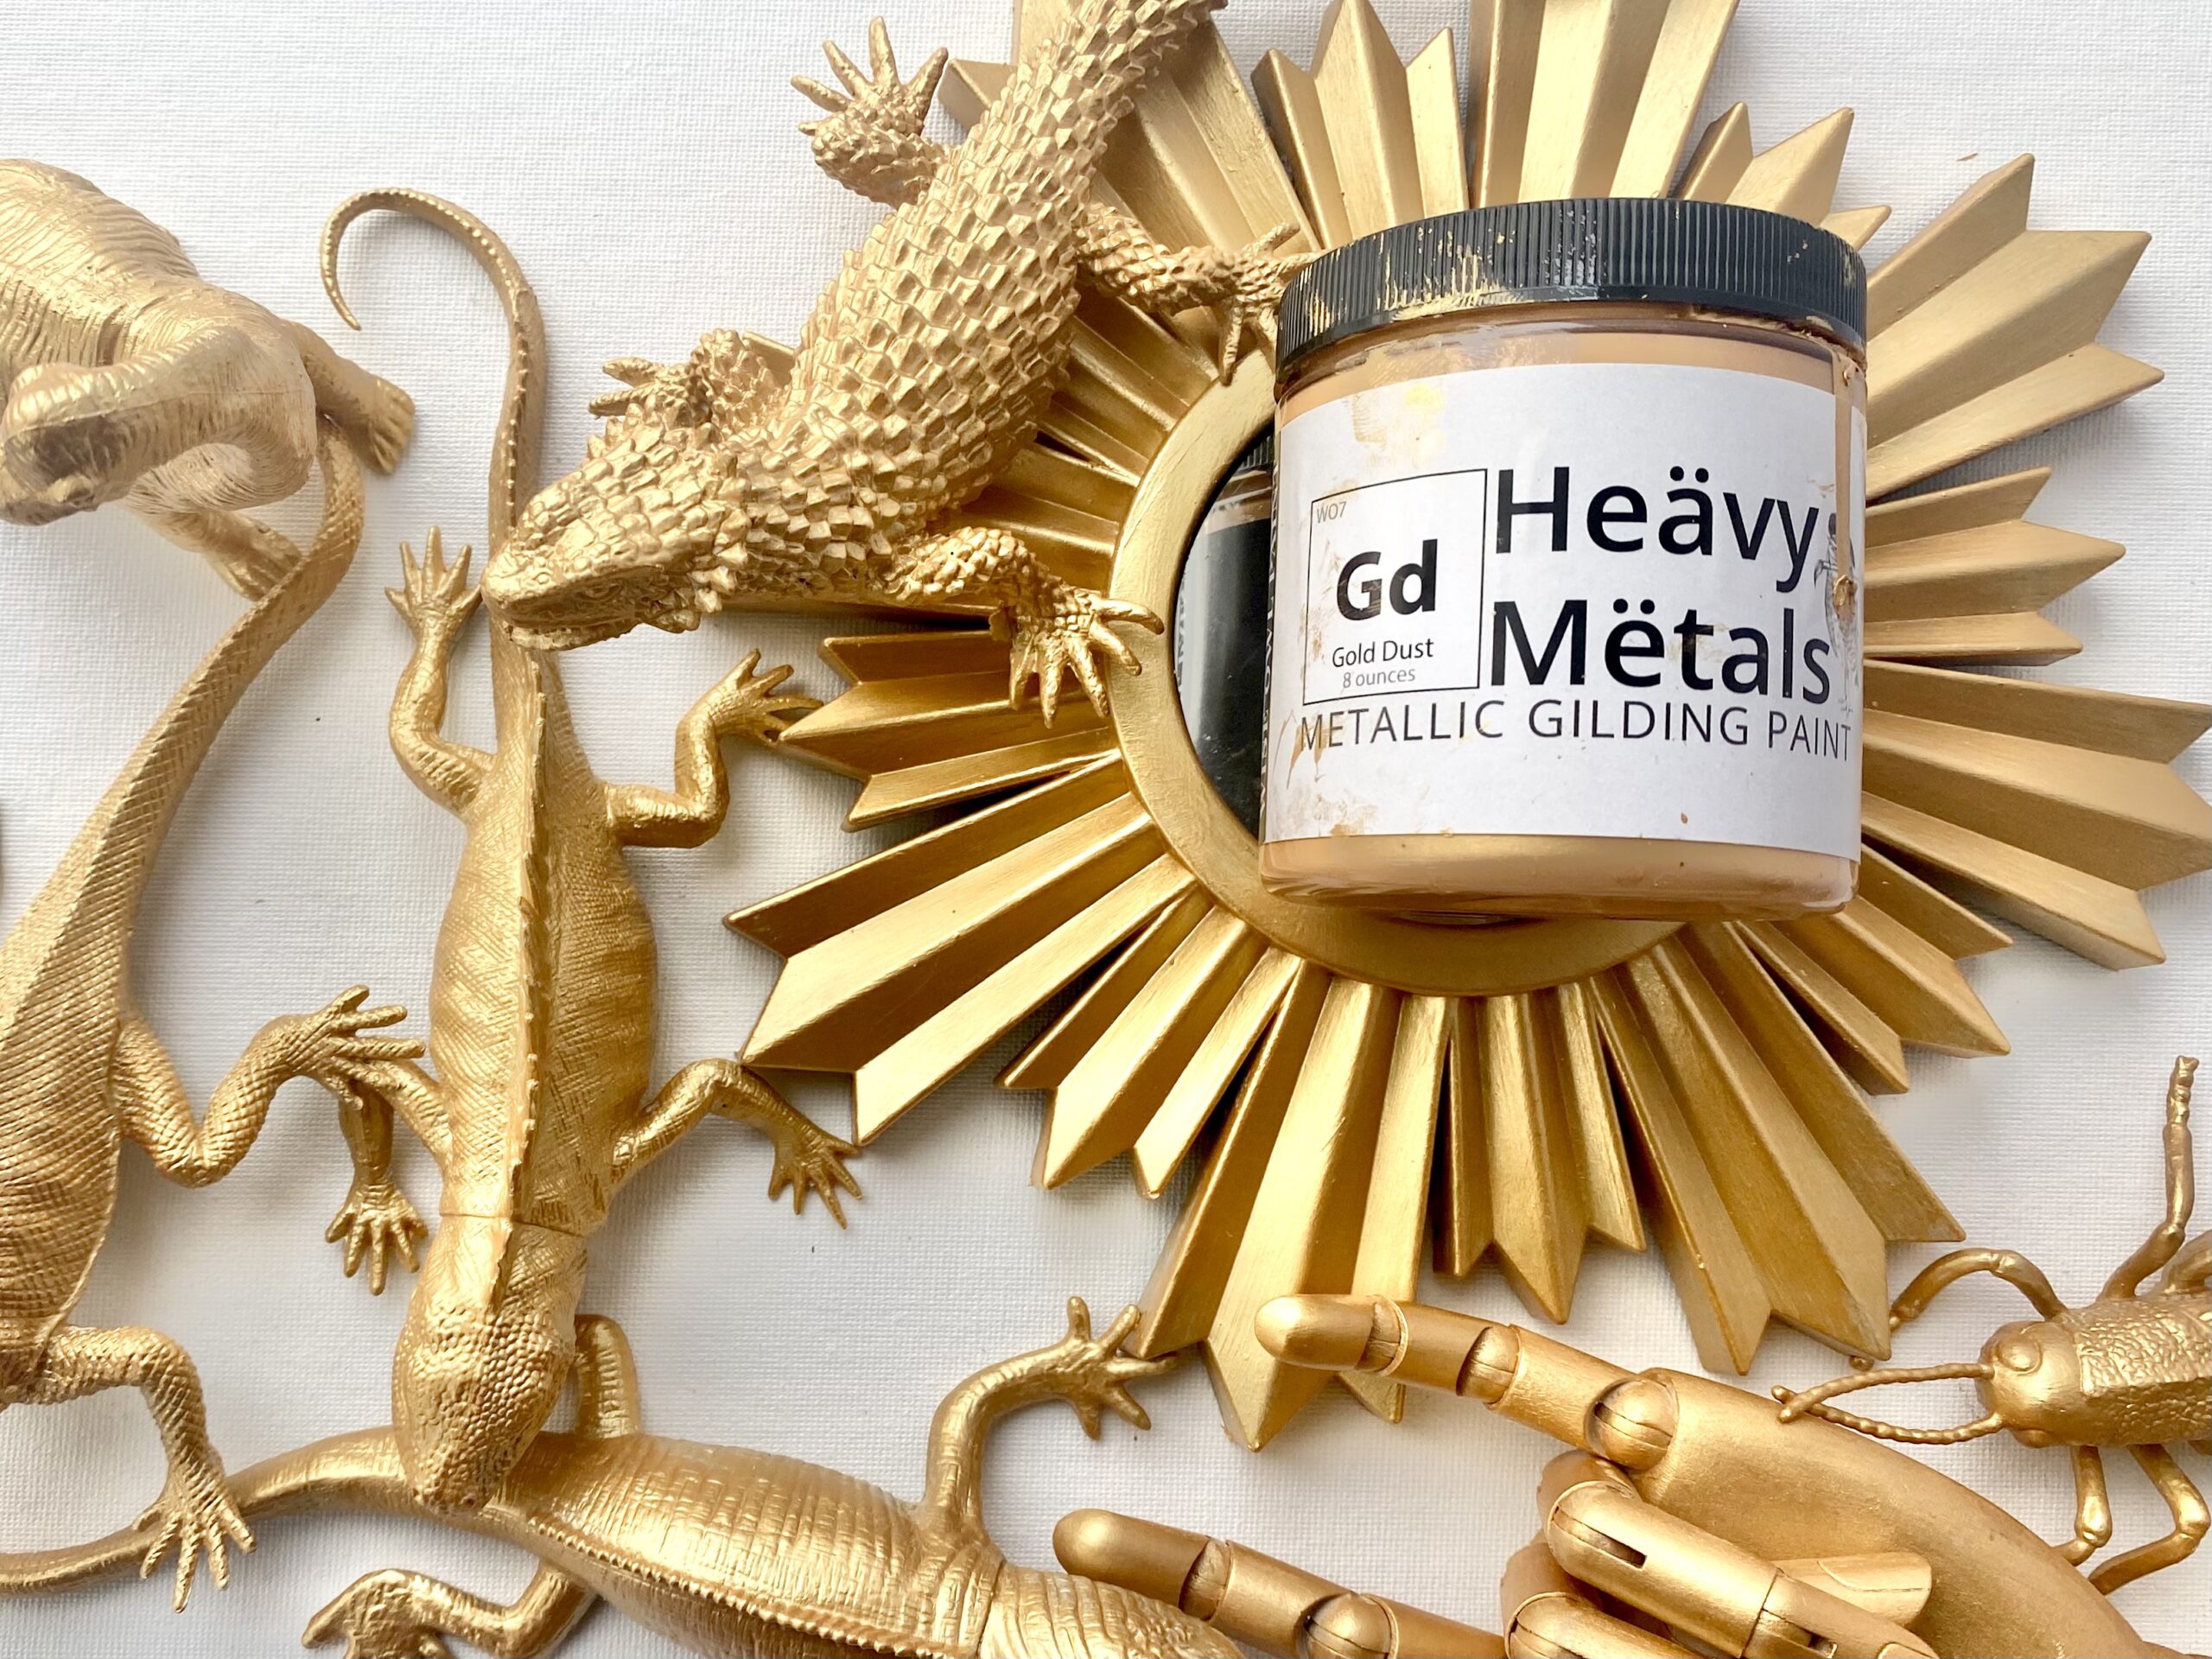 Metallic Paint - Heävy Mëtals by Wise Owl Paint™